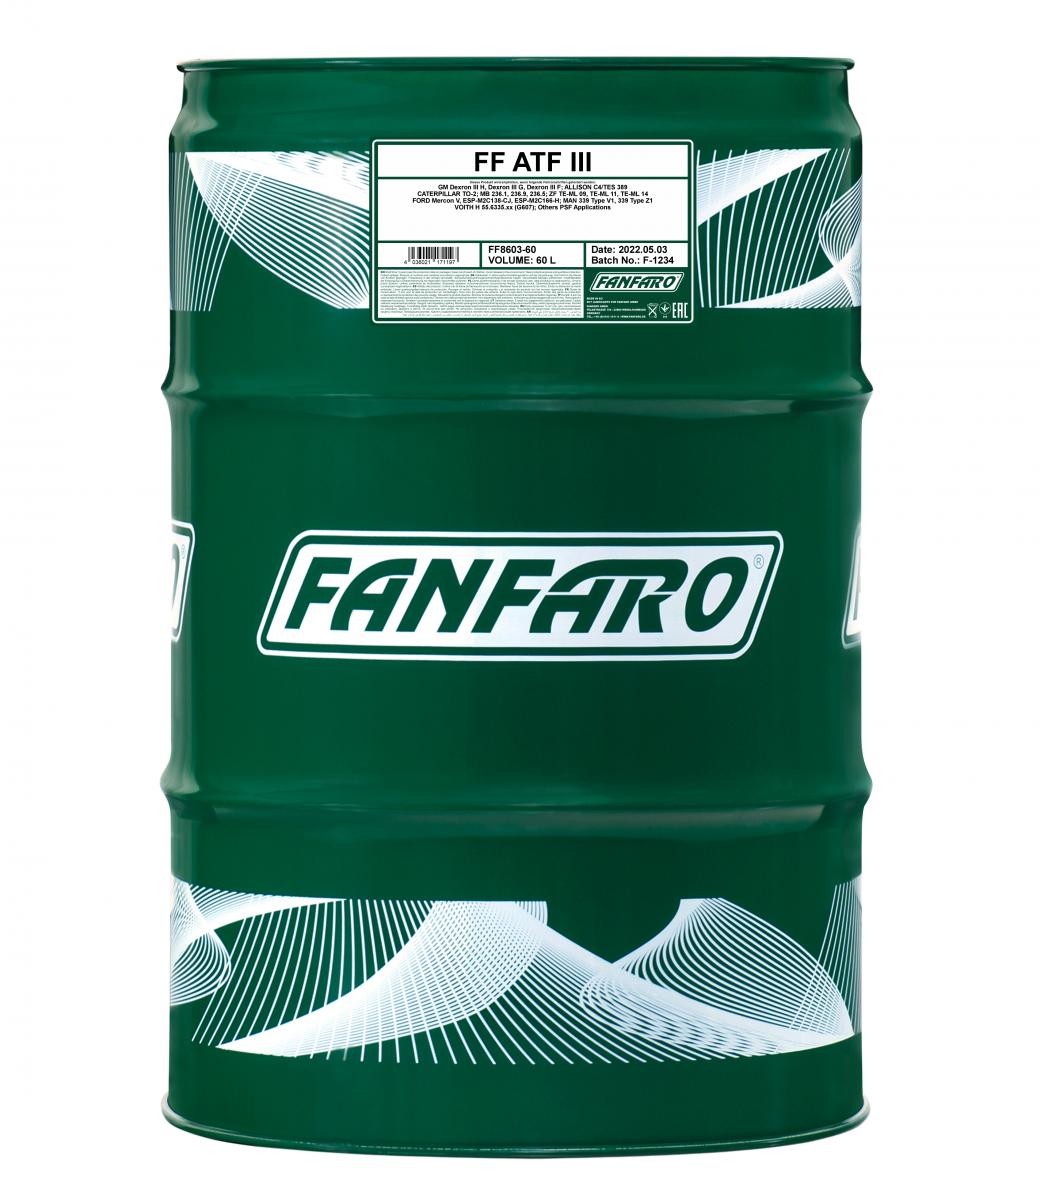 FF8603-60 FANFARO Automatikgetriebeöl VOLVO FL